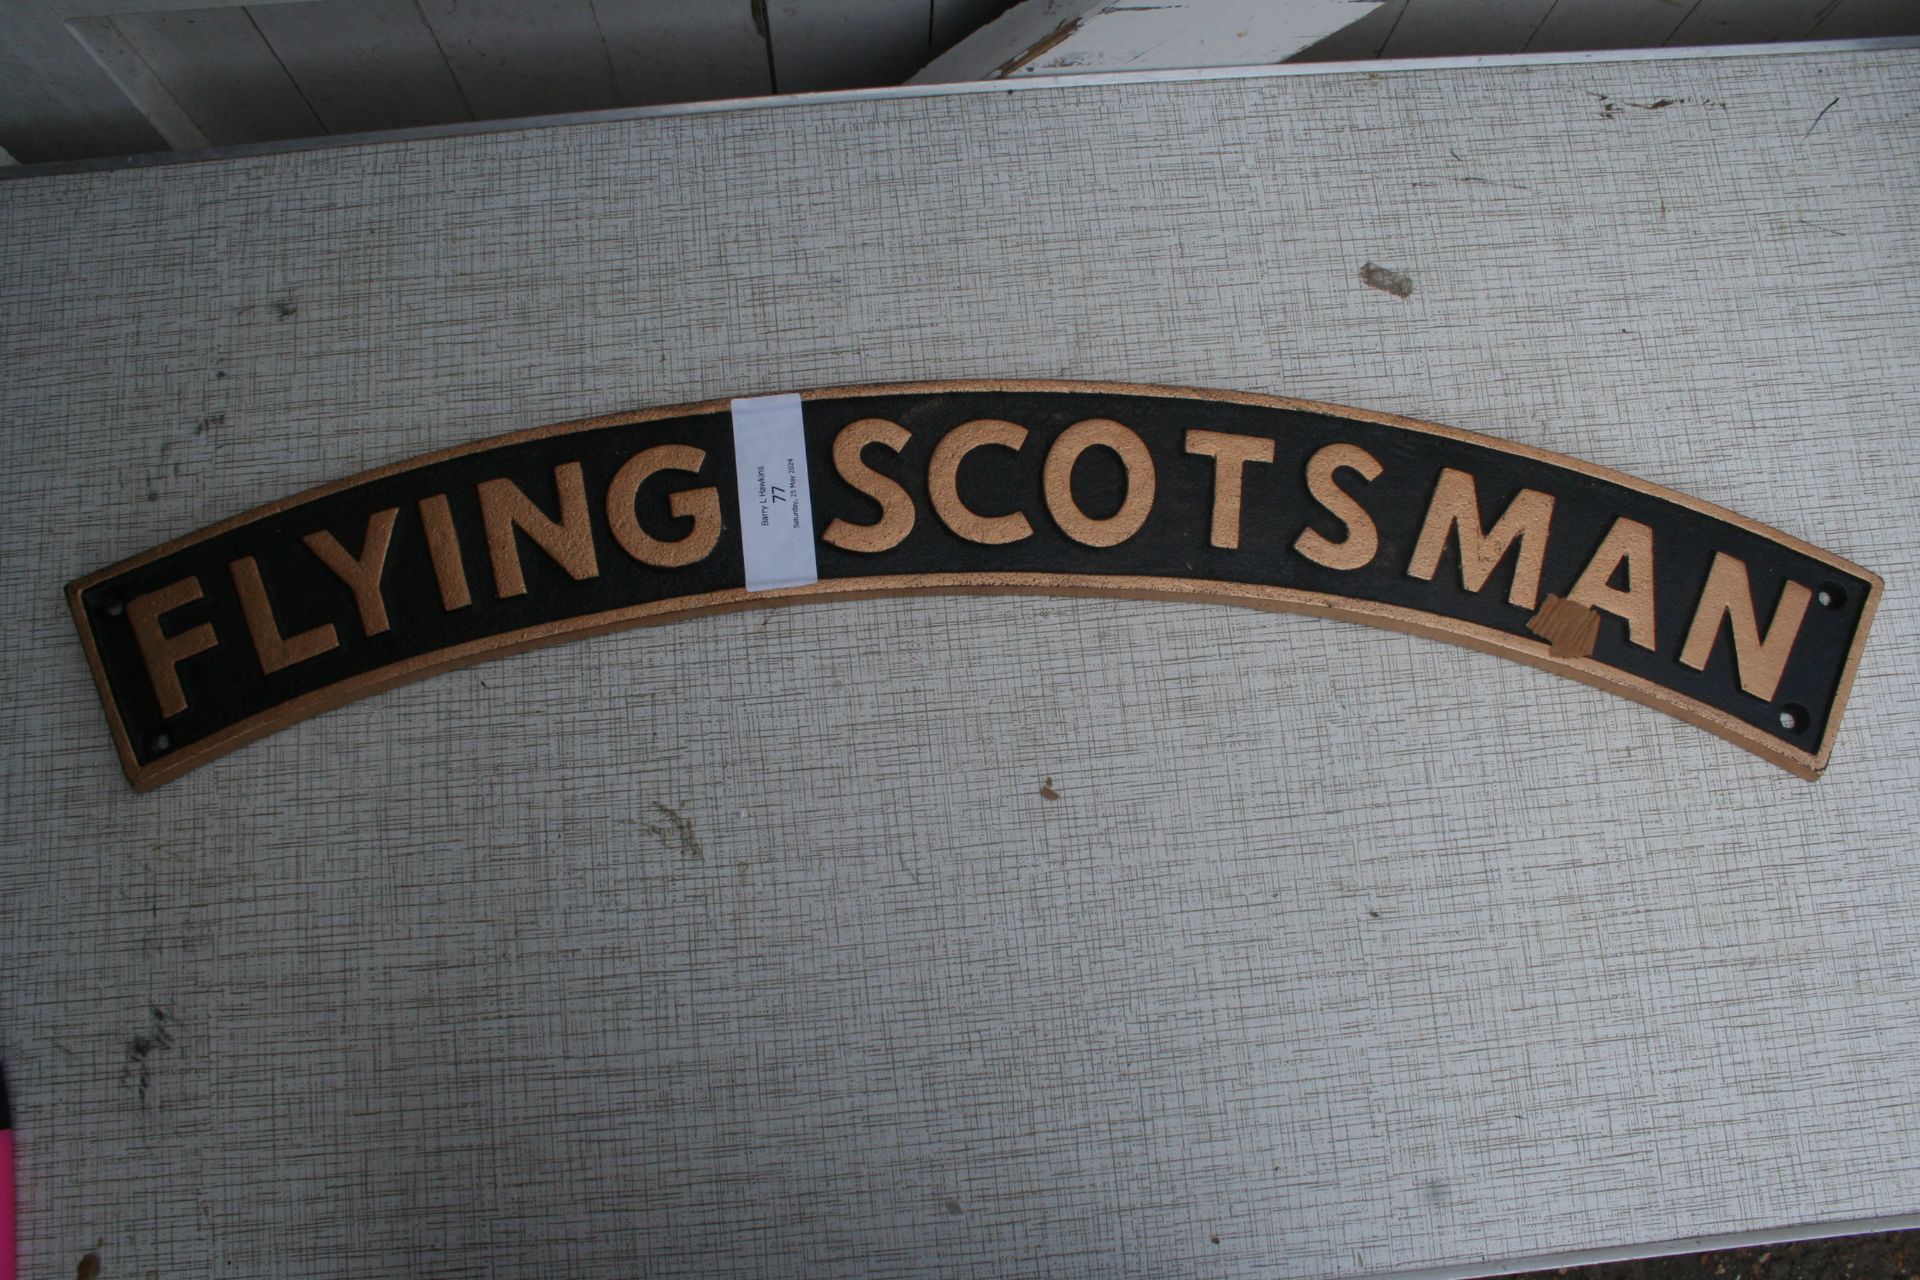 Flying scotsman sign